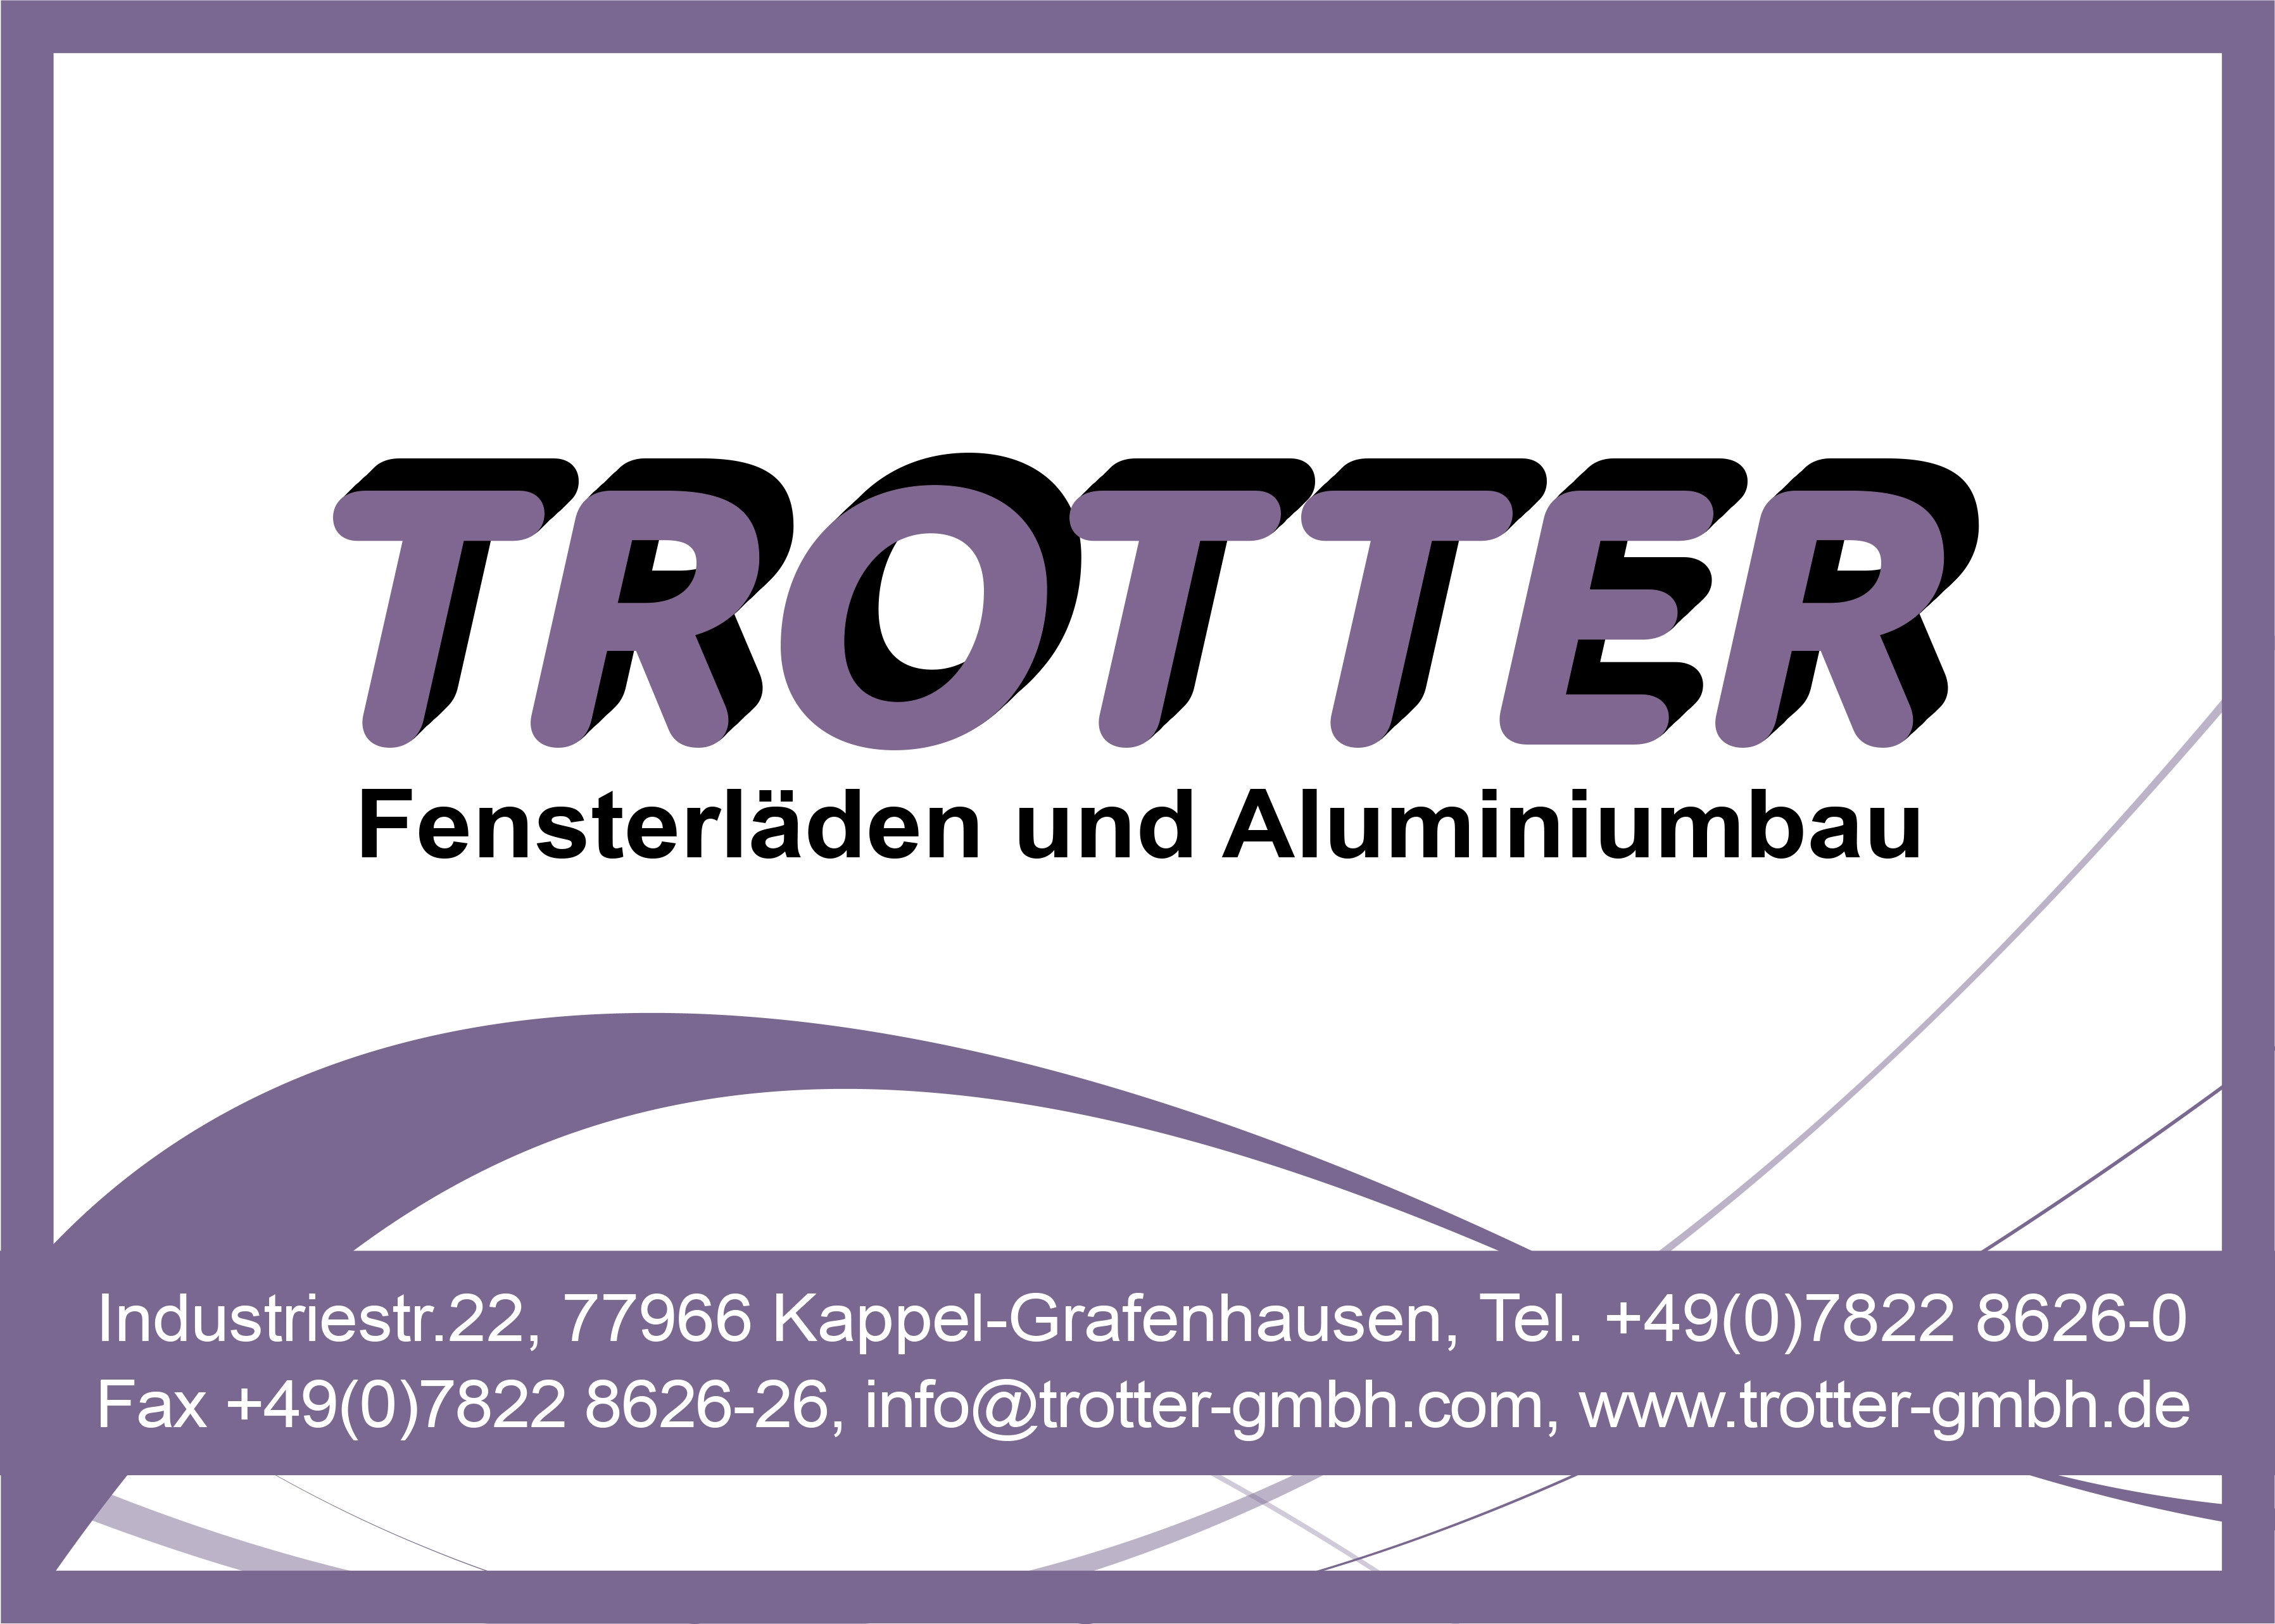 Trotter GmbH